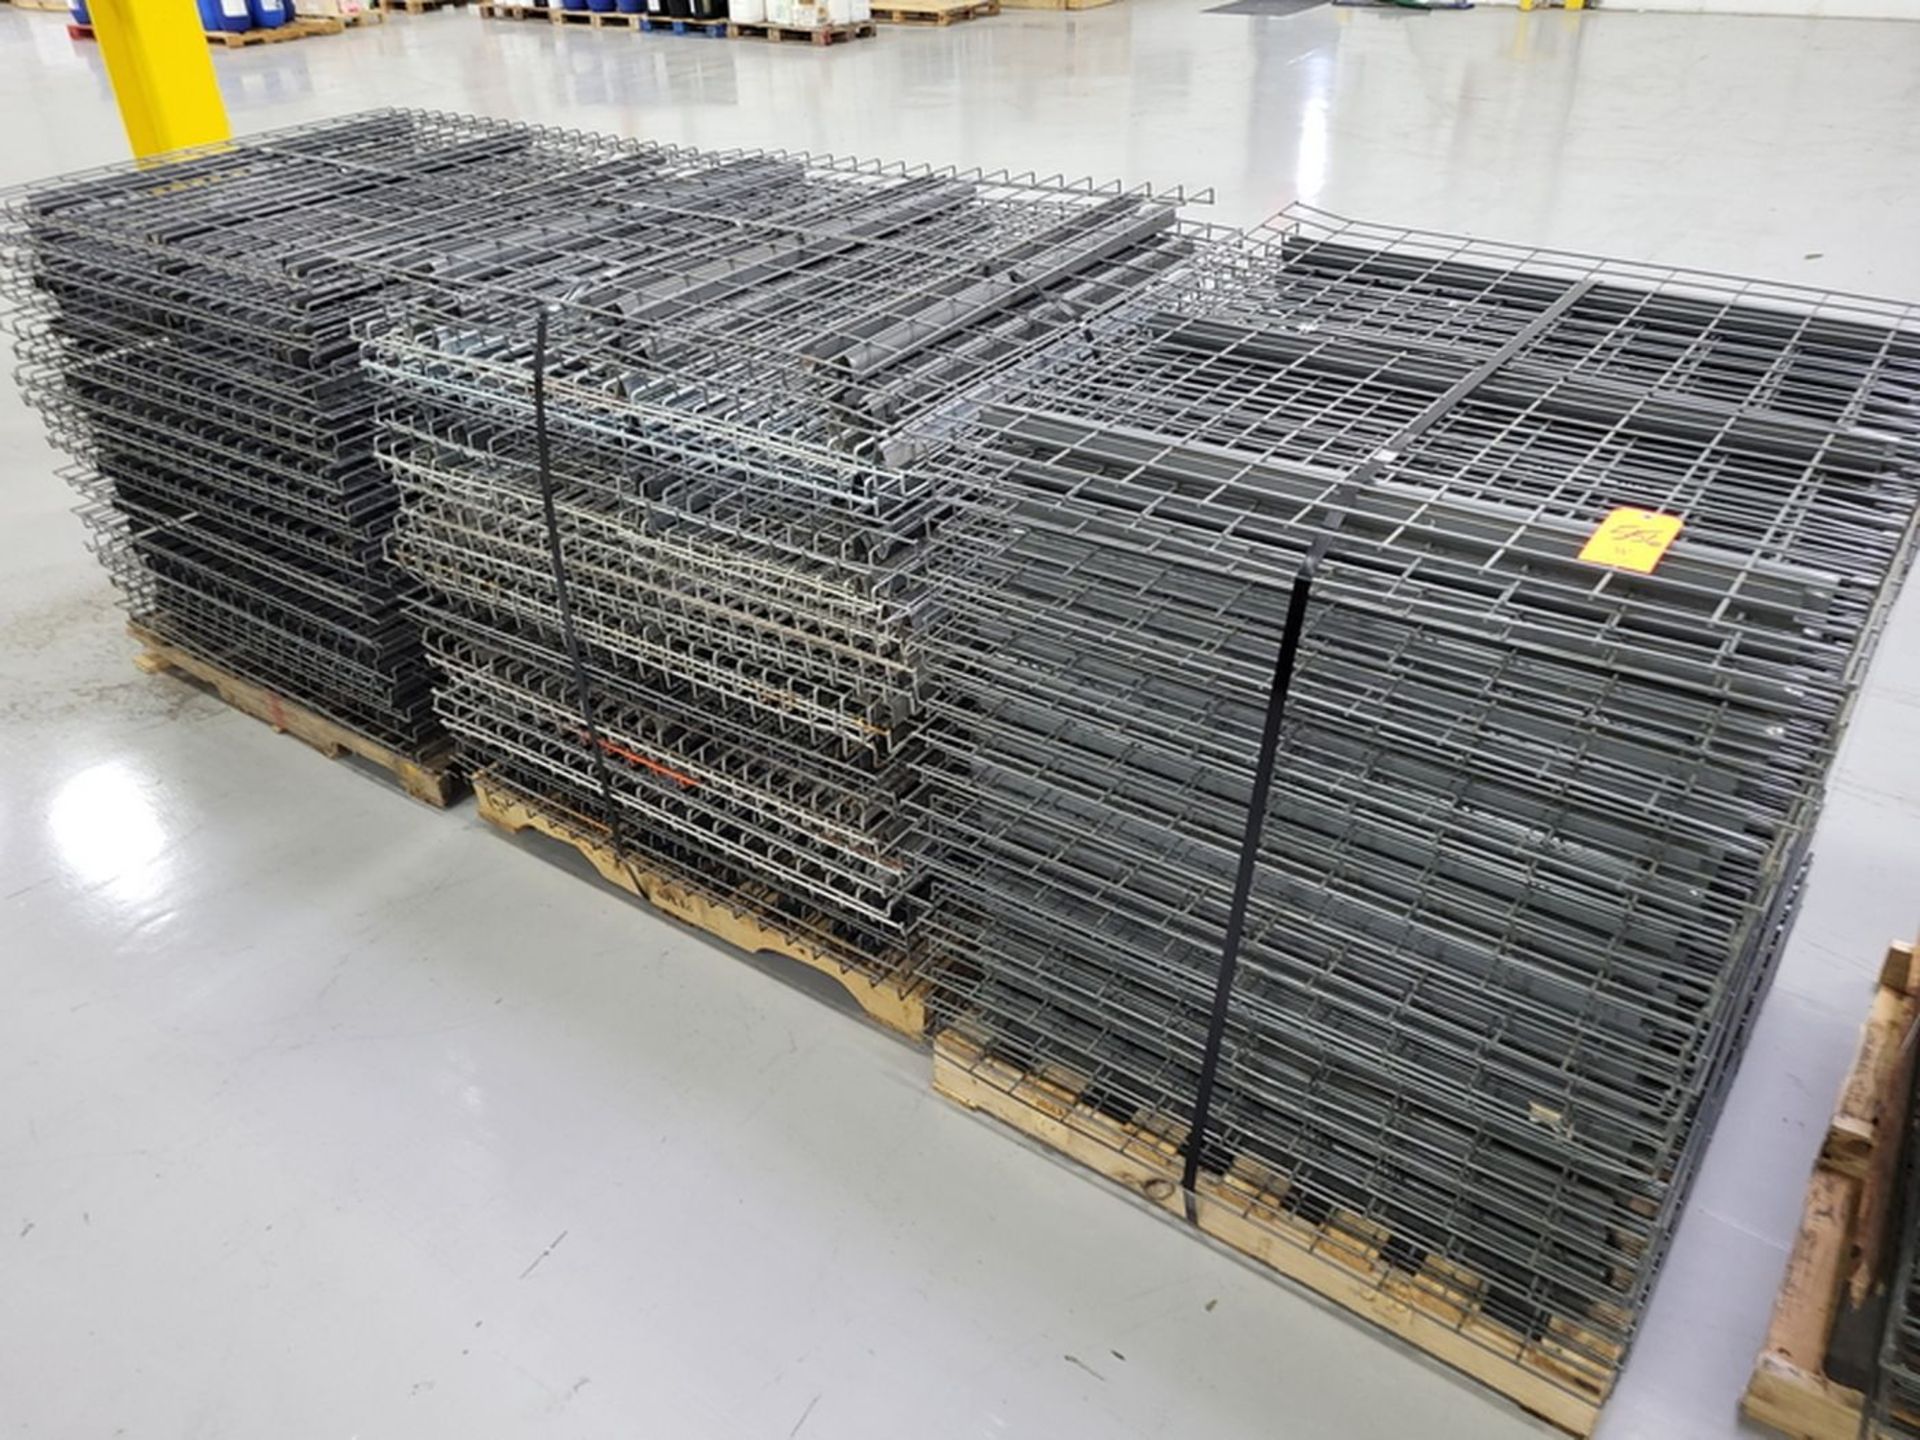 Lot - Steel Wire Pallet Rack Decking; (38) approx. per Pallet, on (3) Pallets